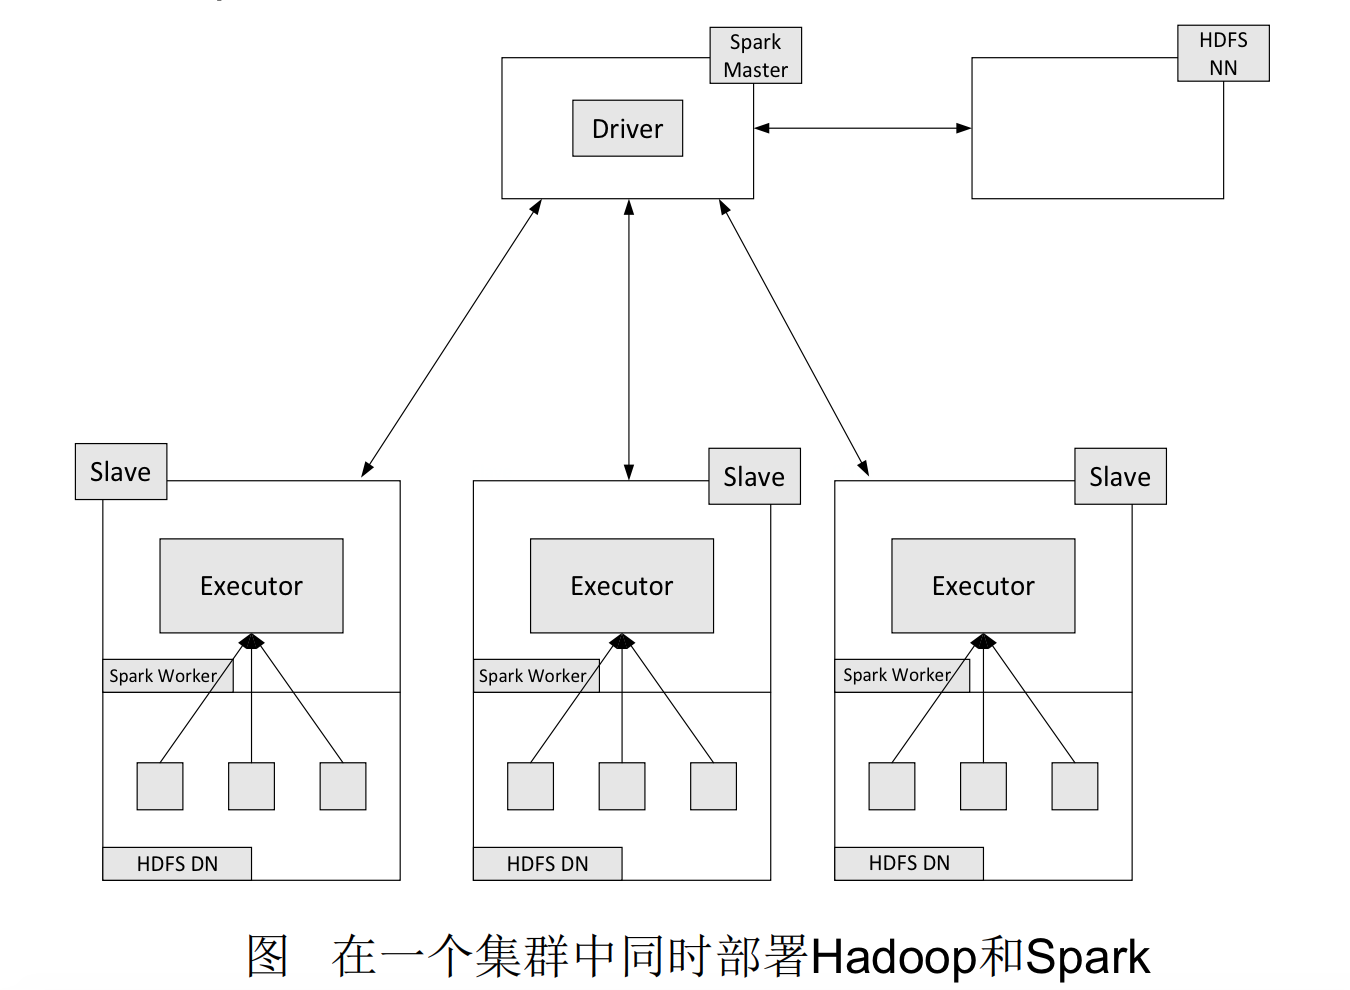 hadoop-spark-deployment